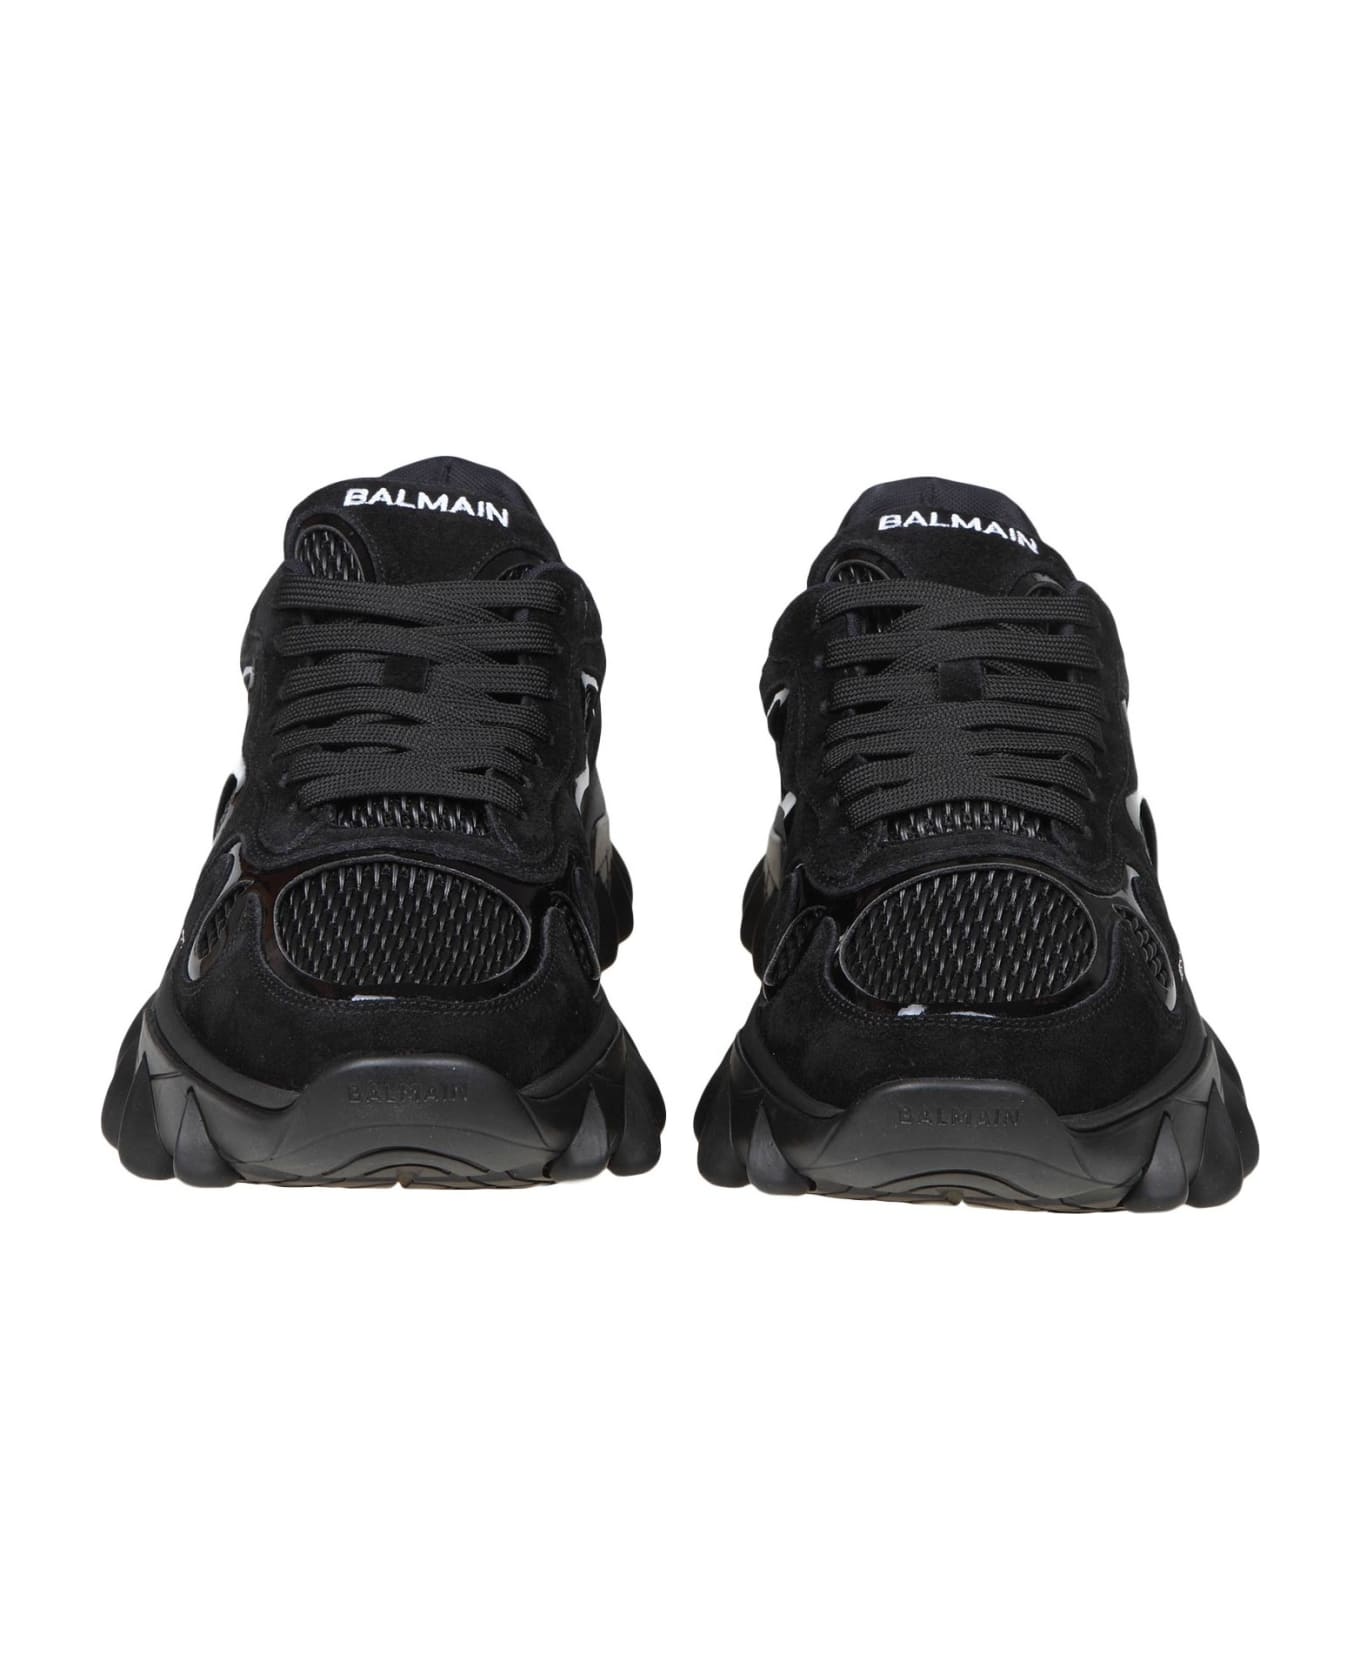 Balmain B-east Sneakers In Black Leather And Mesh - Black